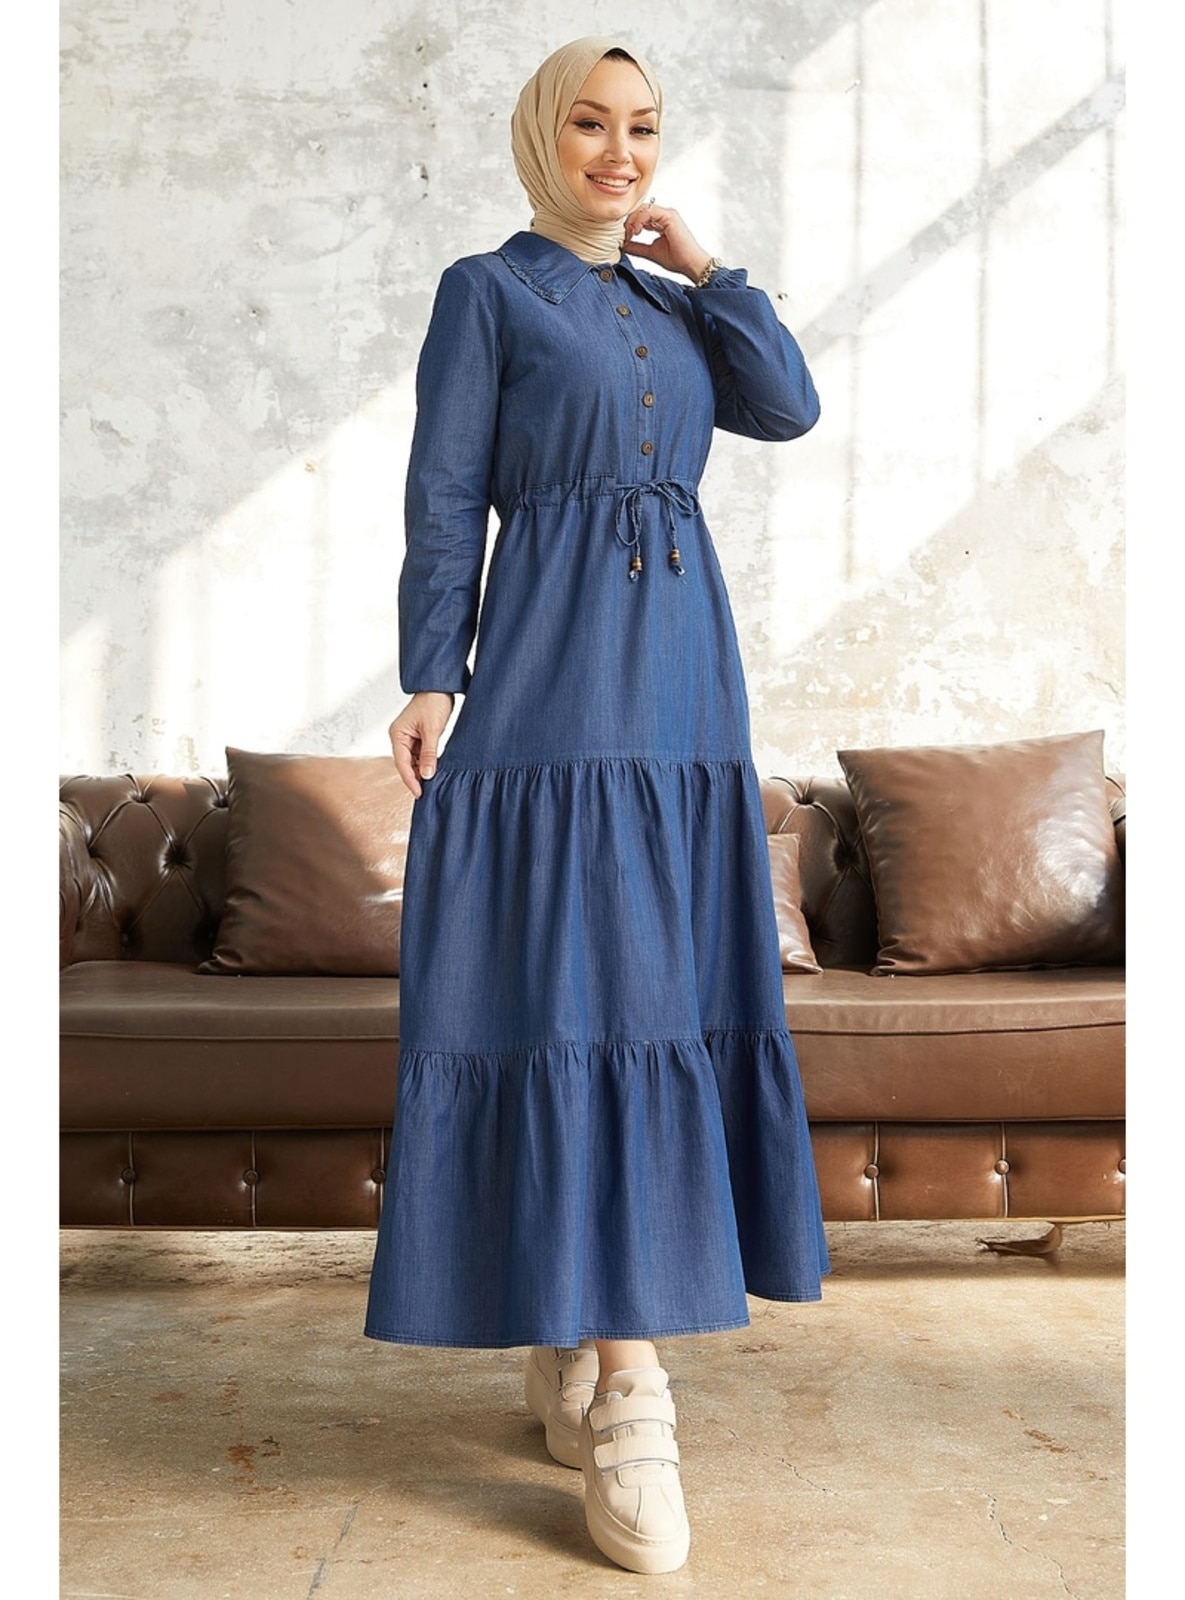 Blue - Round Collar - Unlined - Modest Dress